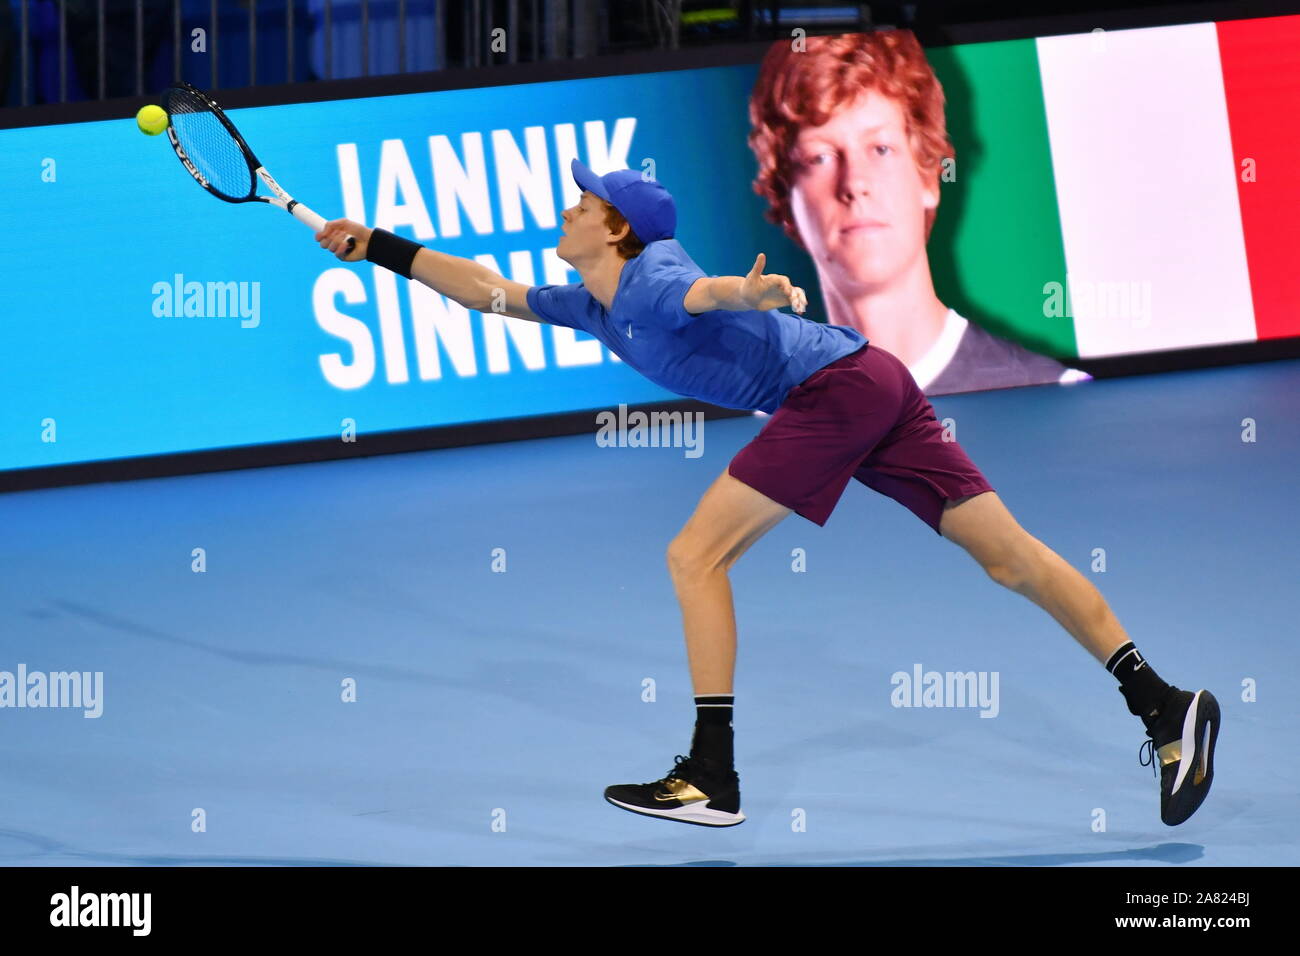 Milano, Italy, 05 Nov 2019, jannik sinner during Next Gen ATP Finals - Tournament round - Frances Tiafoe vs J